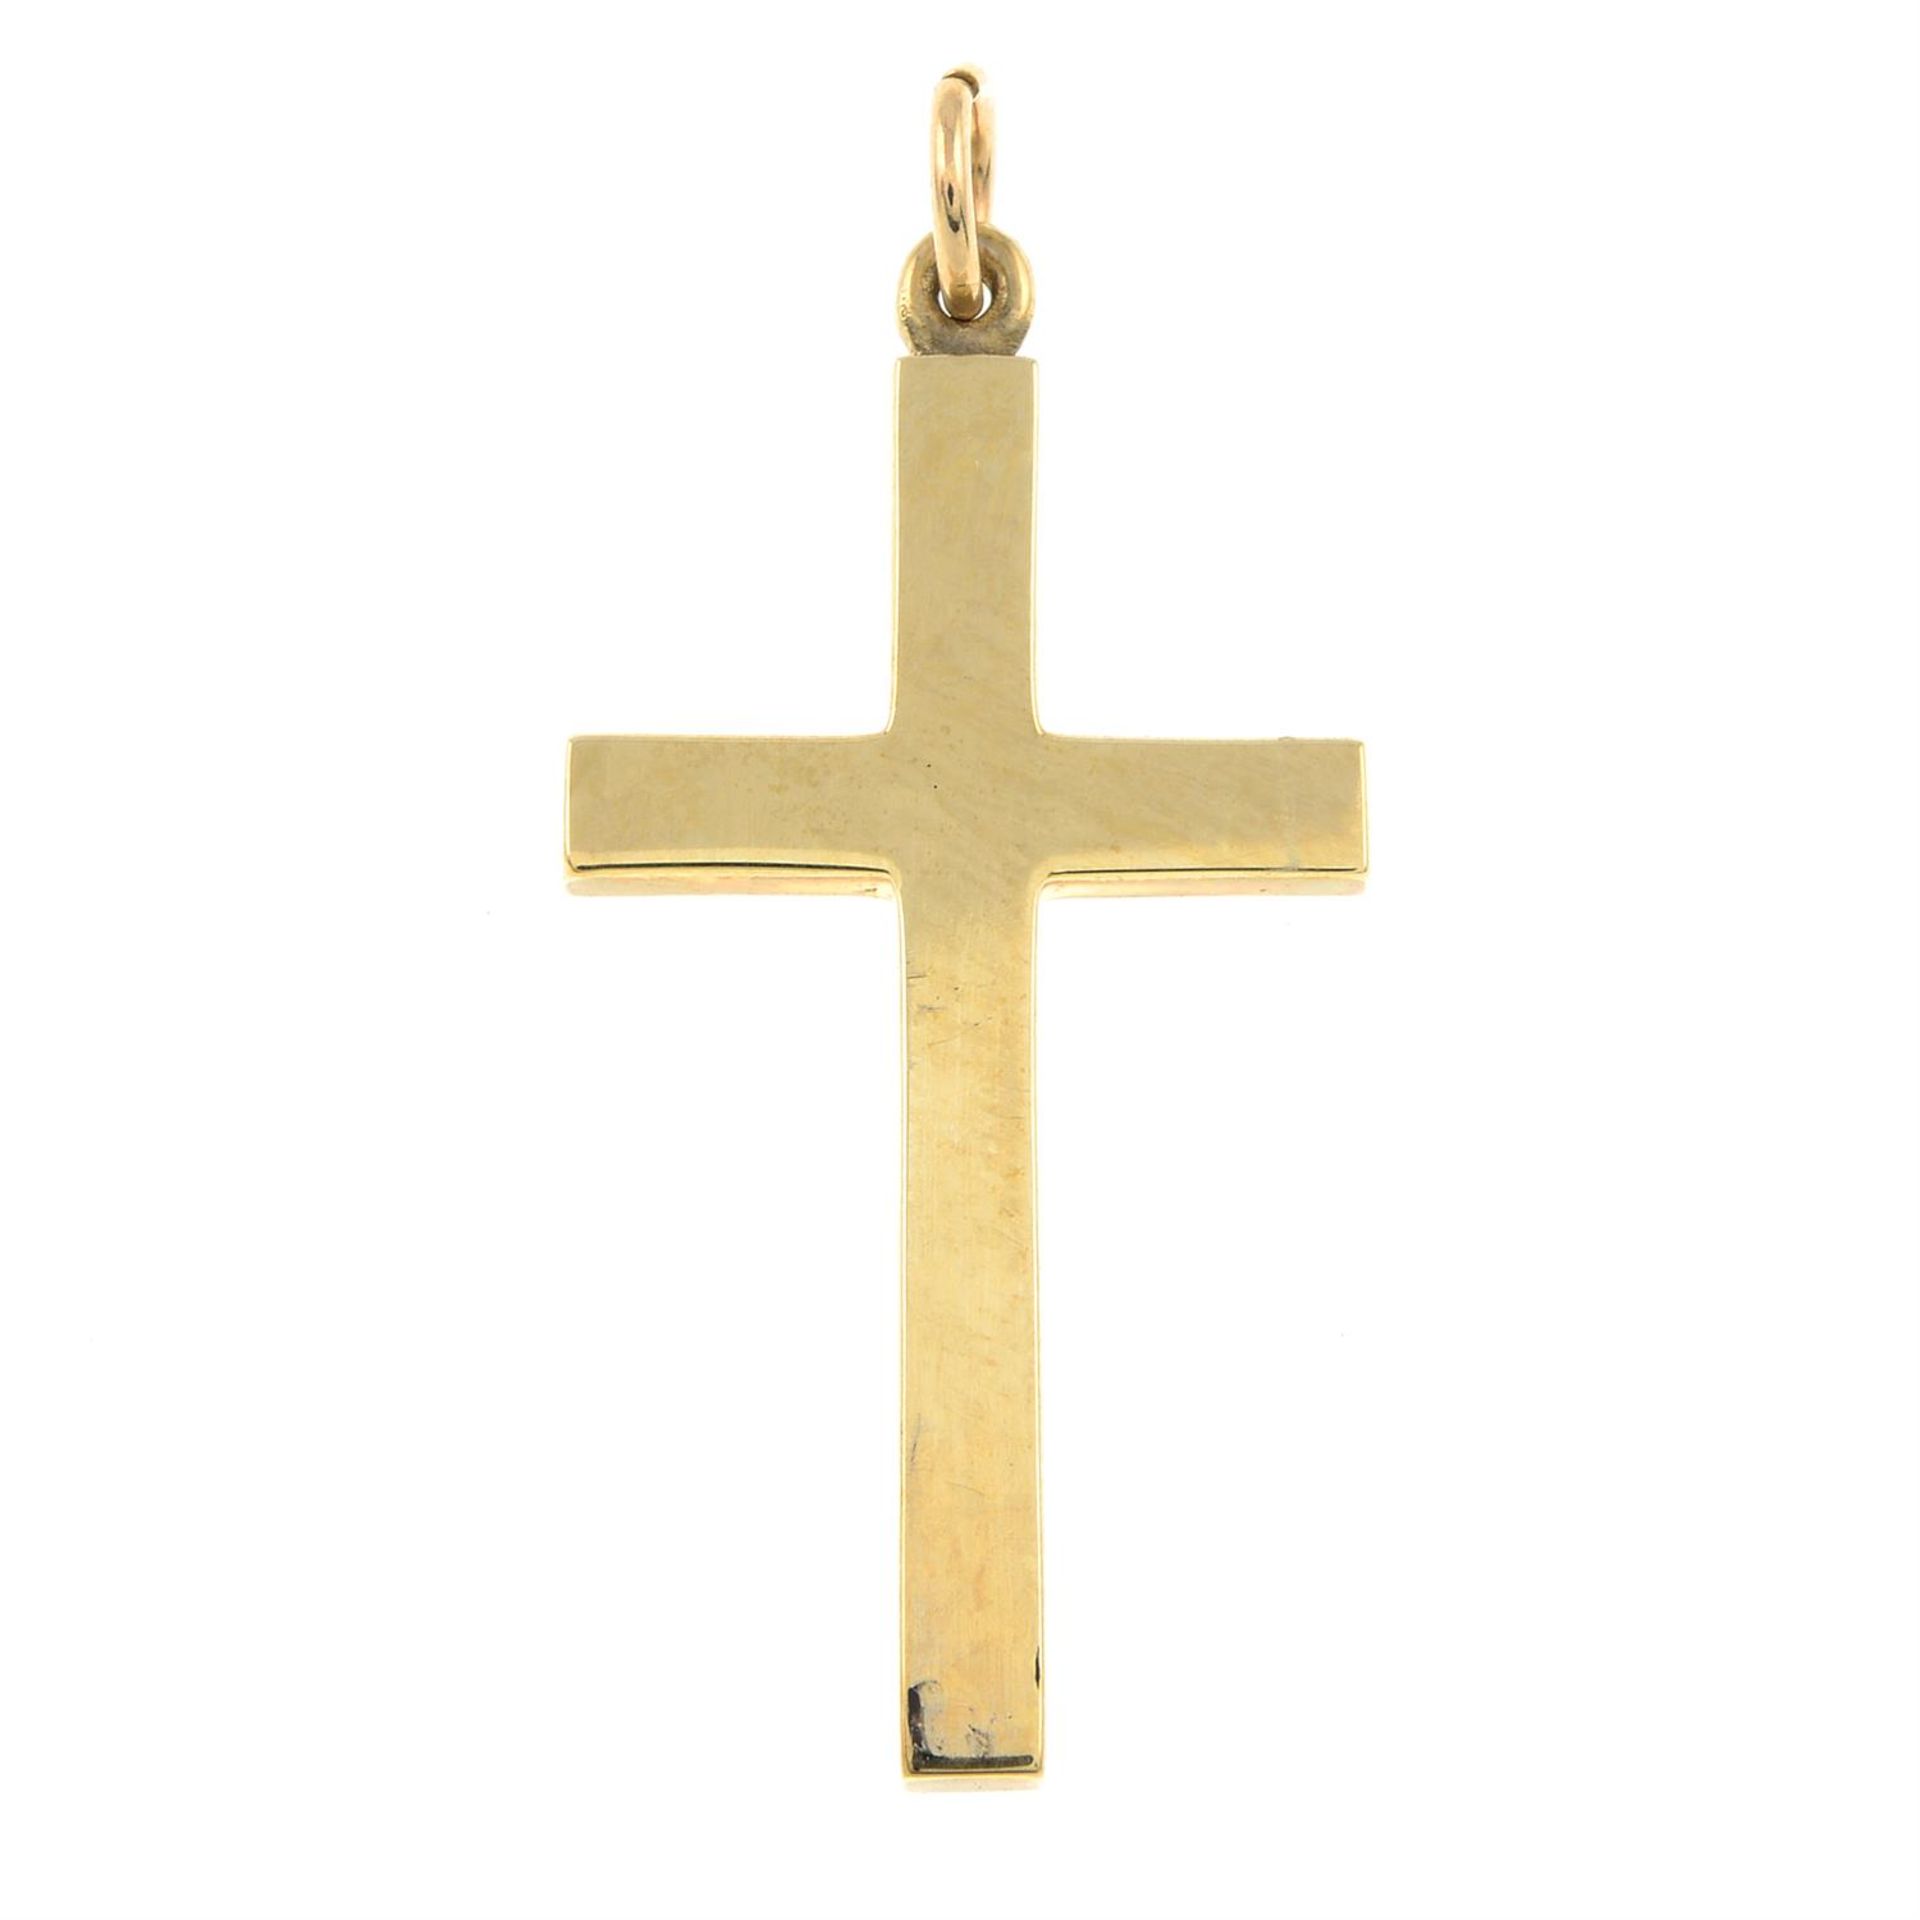 A 9ct gold cross pendant.